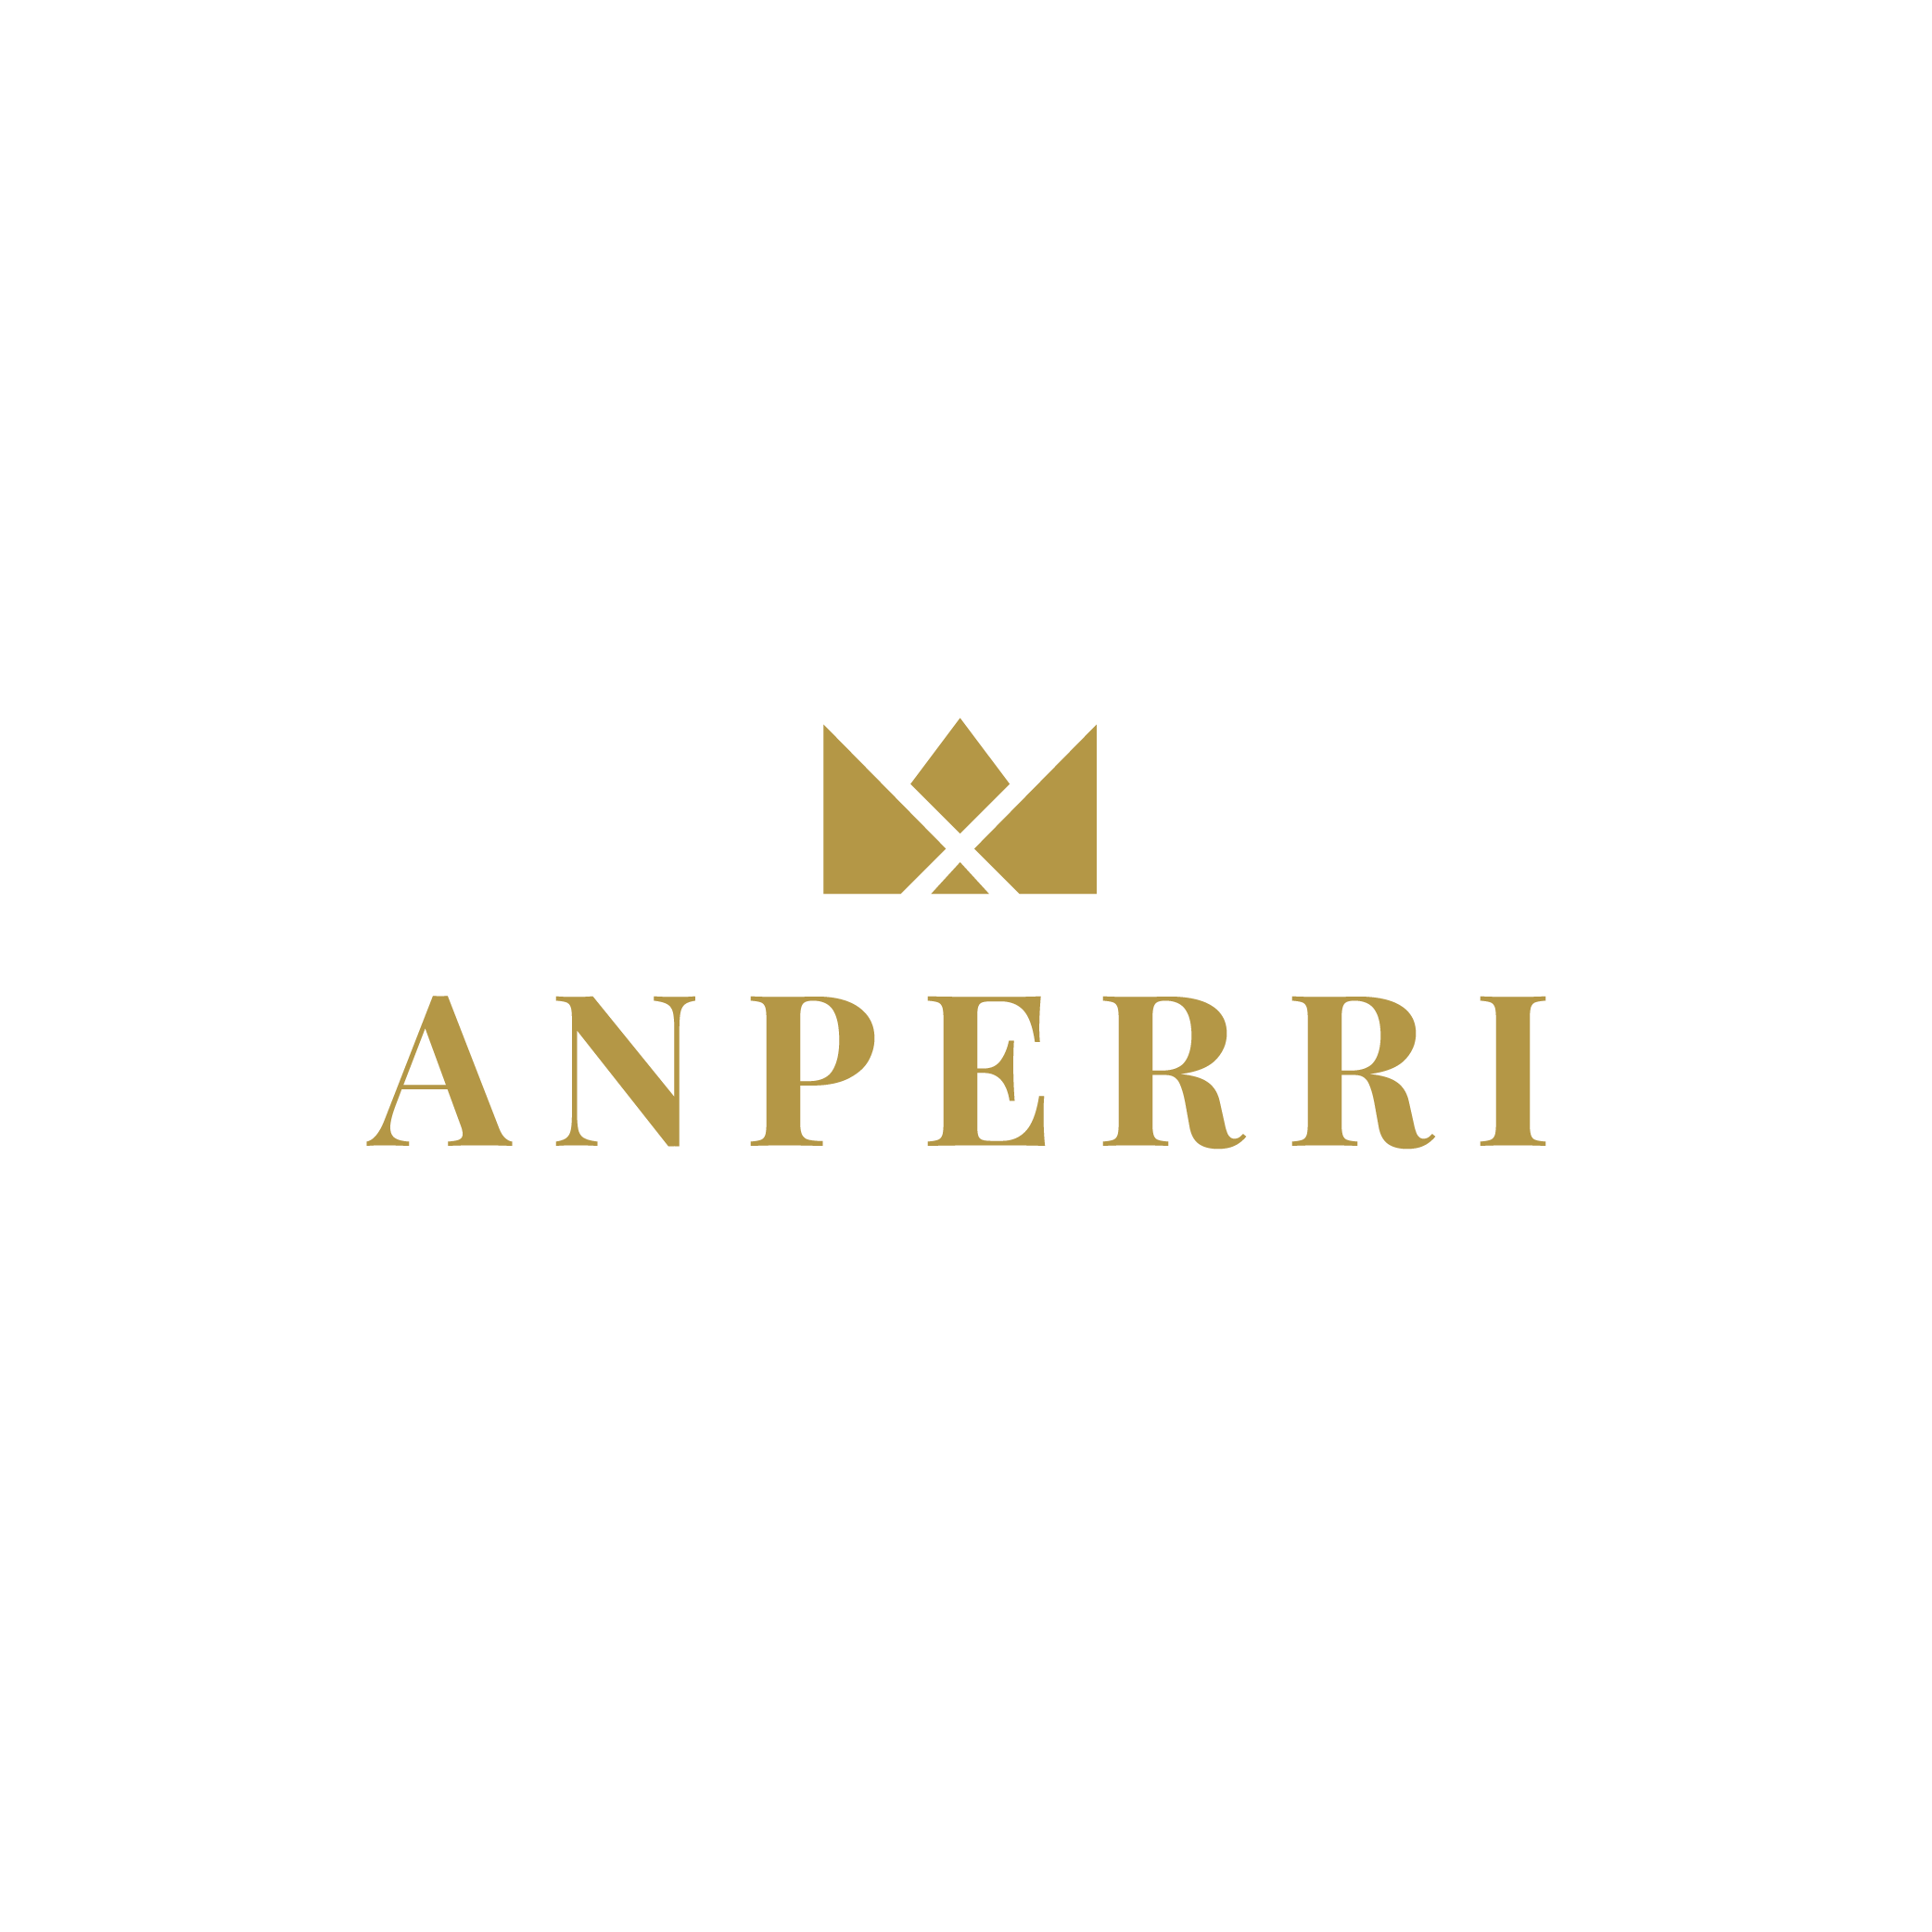 anperri-06 - cópia 2